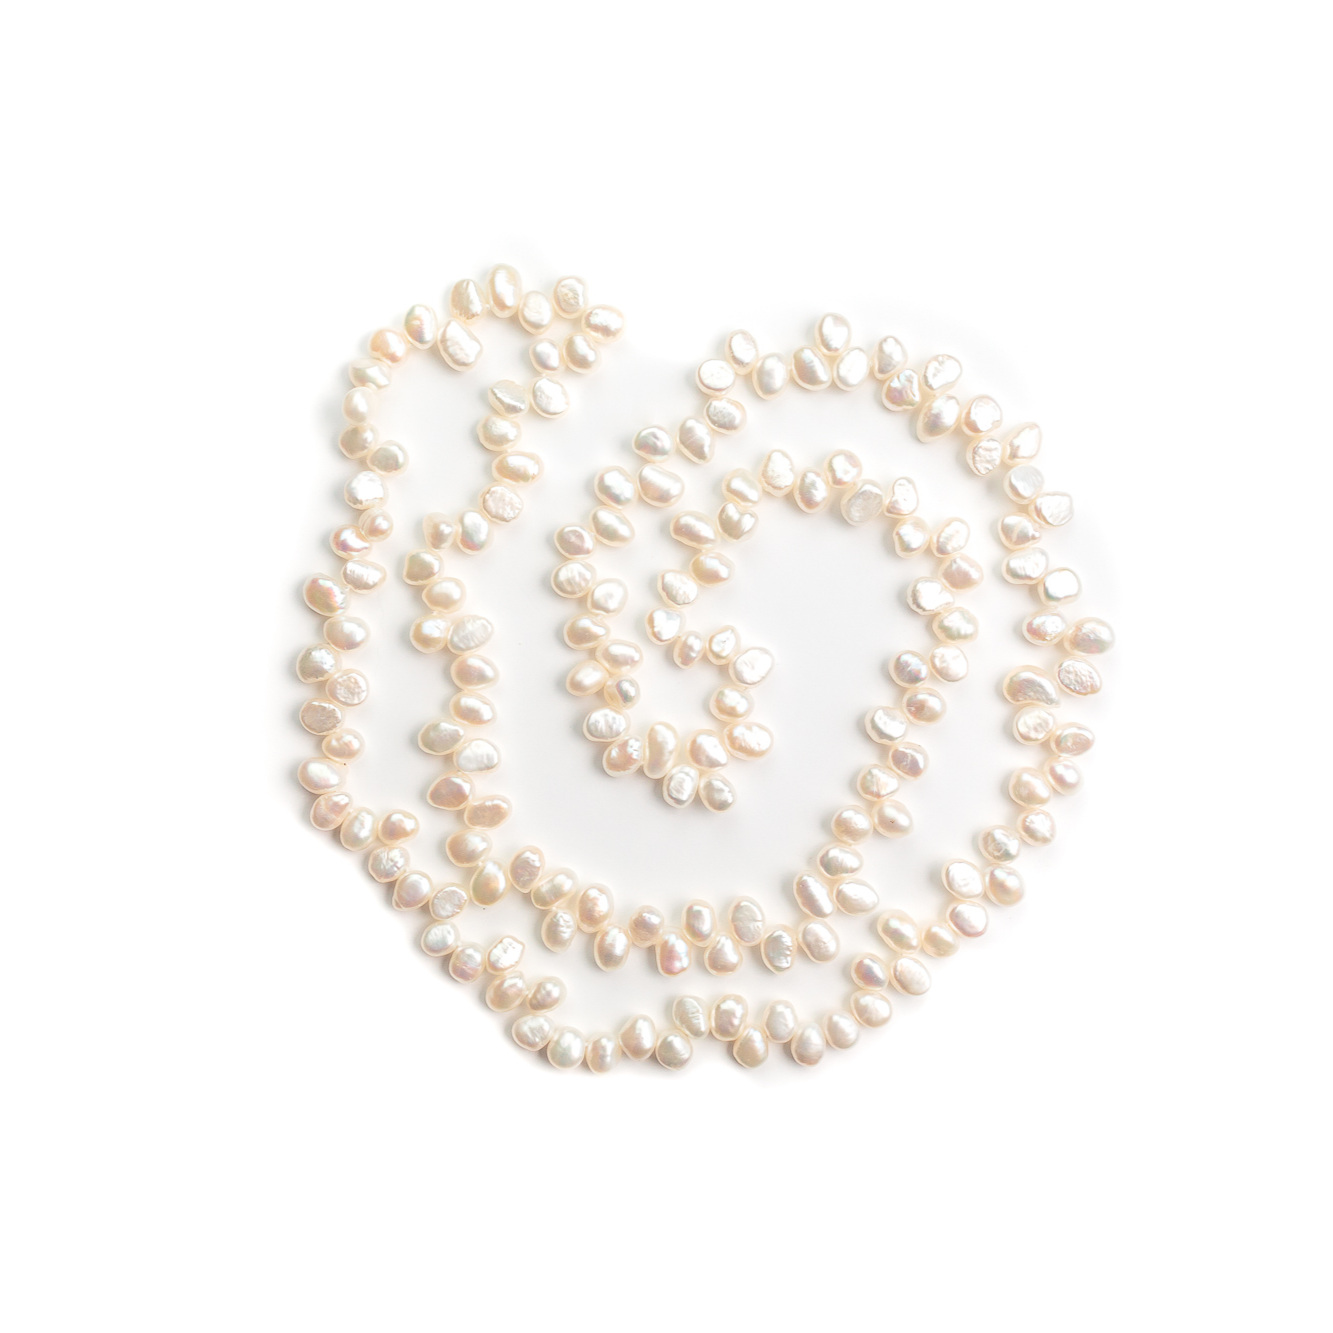 Product - Pearls long 1 001.jpg